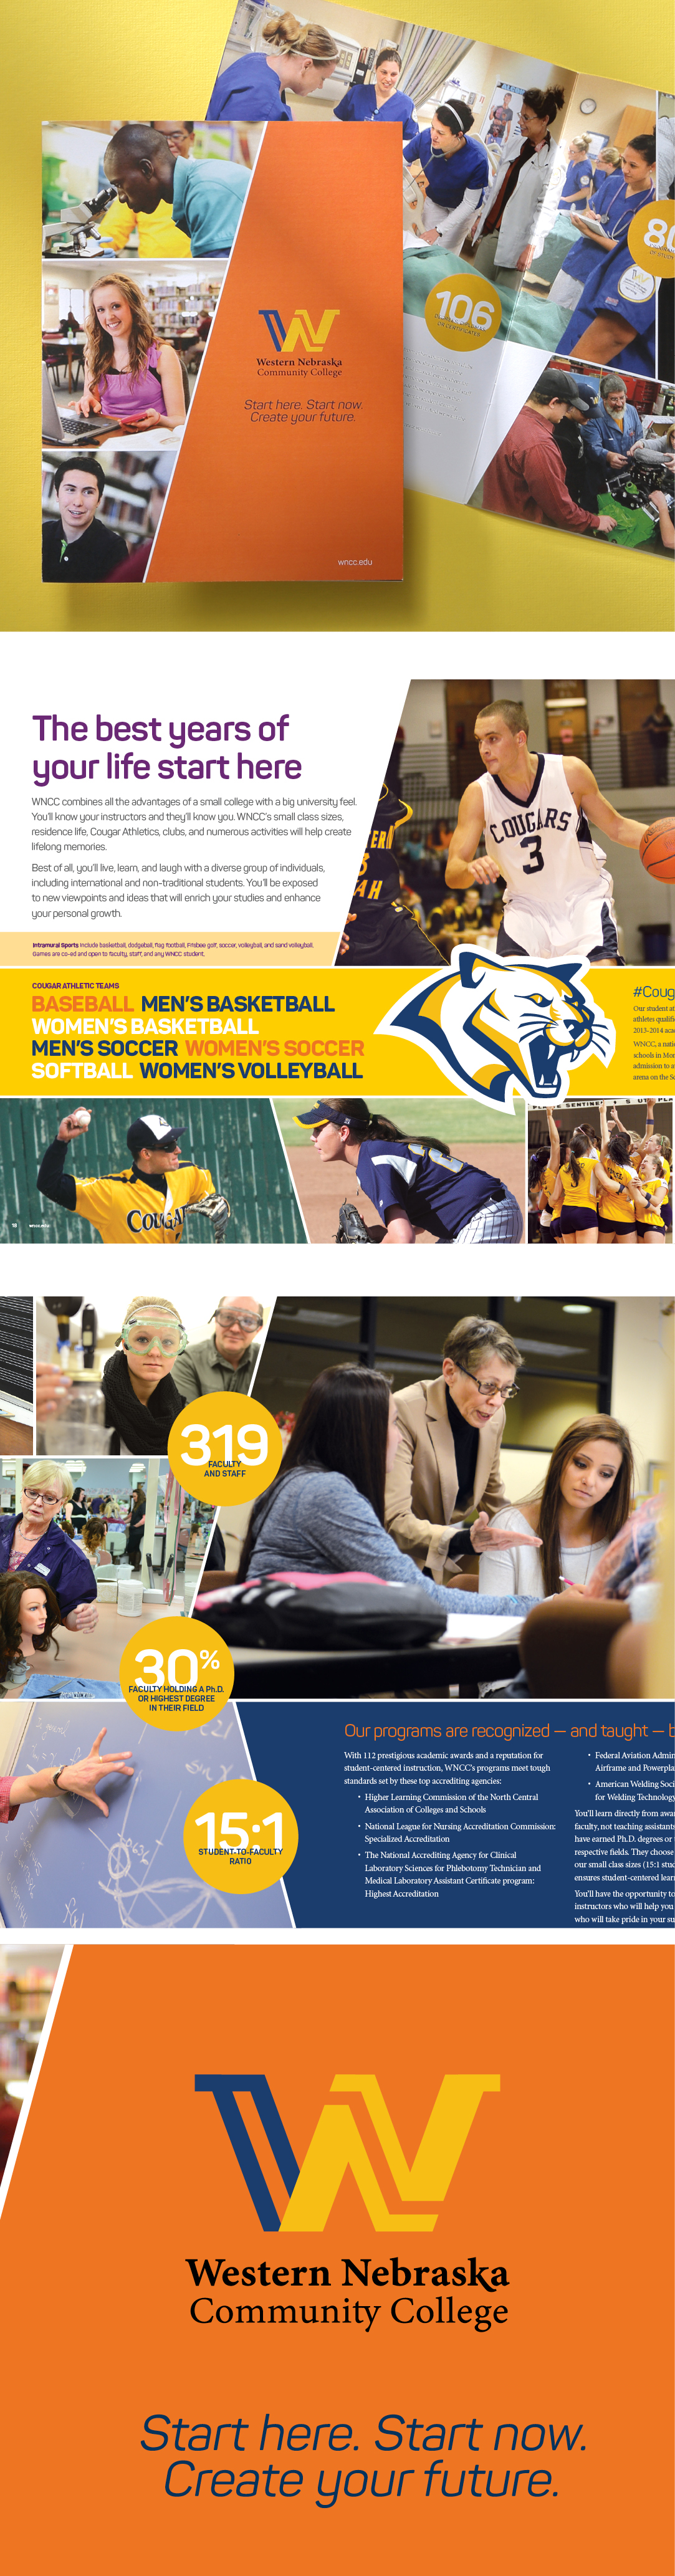 Western Nebraska Community College Admissions brochure